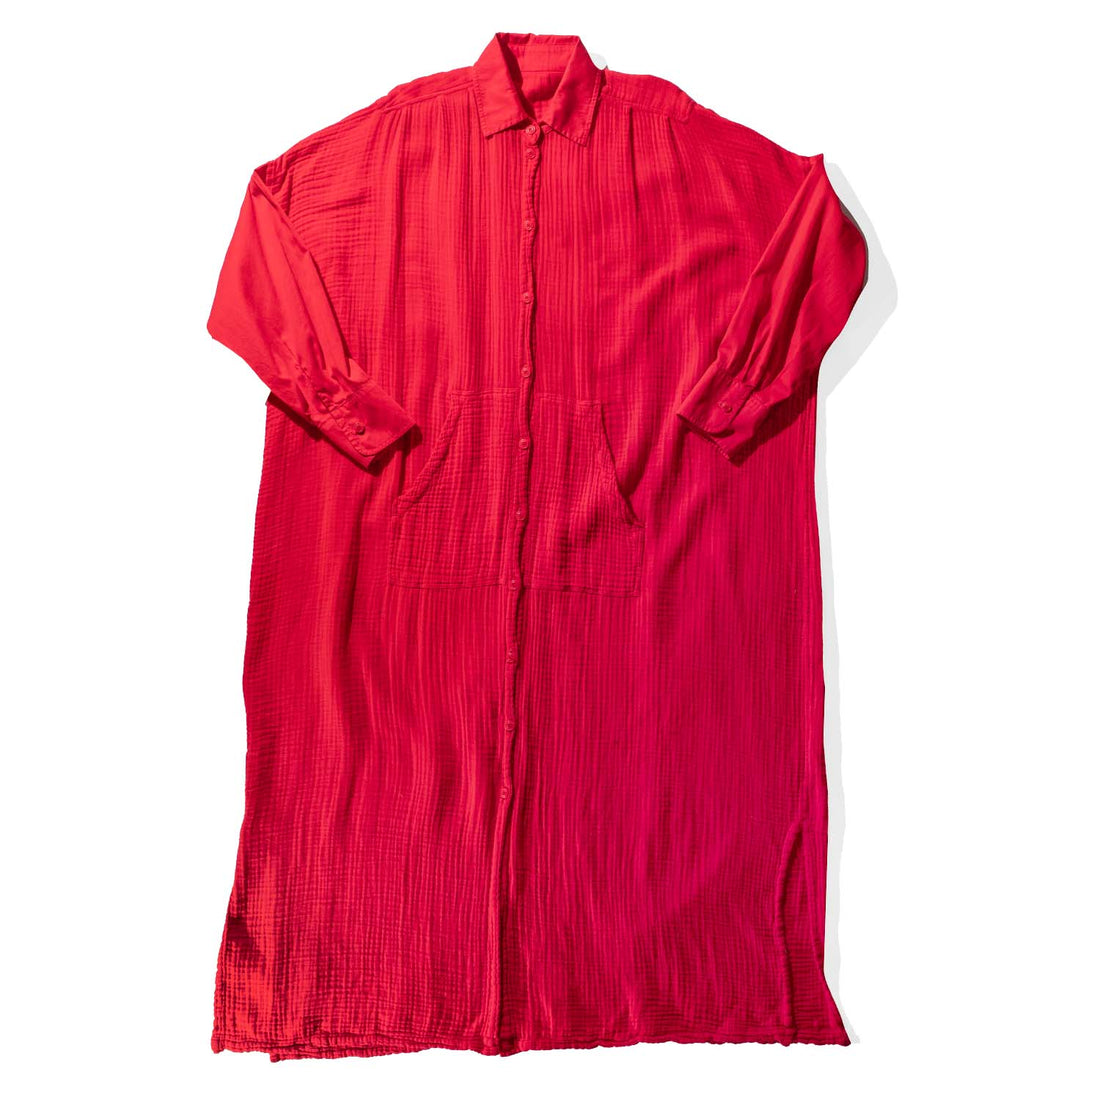 Raquel Allegra Caftan Shirt Dress in Tomato